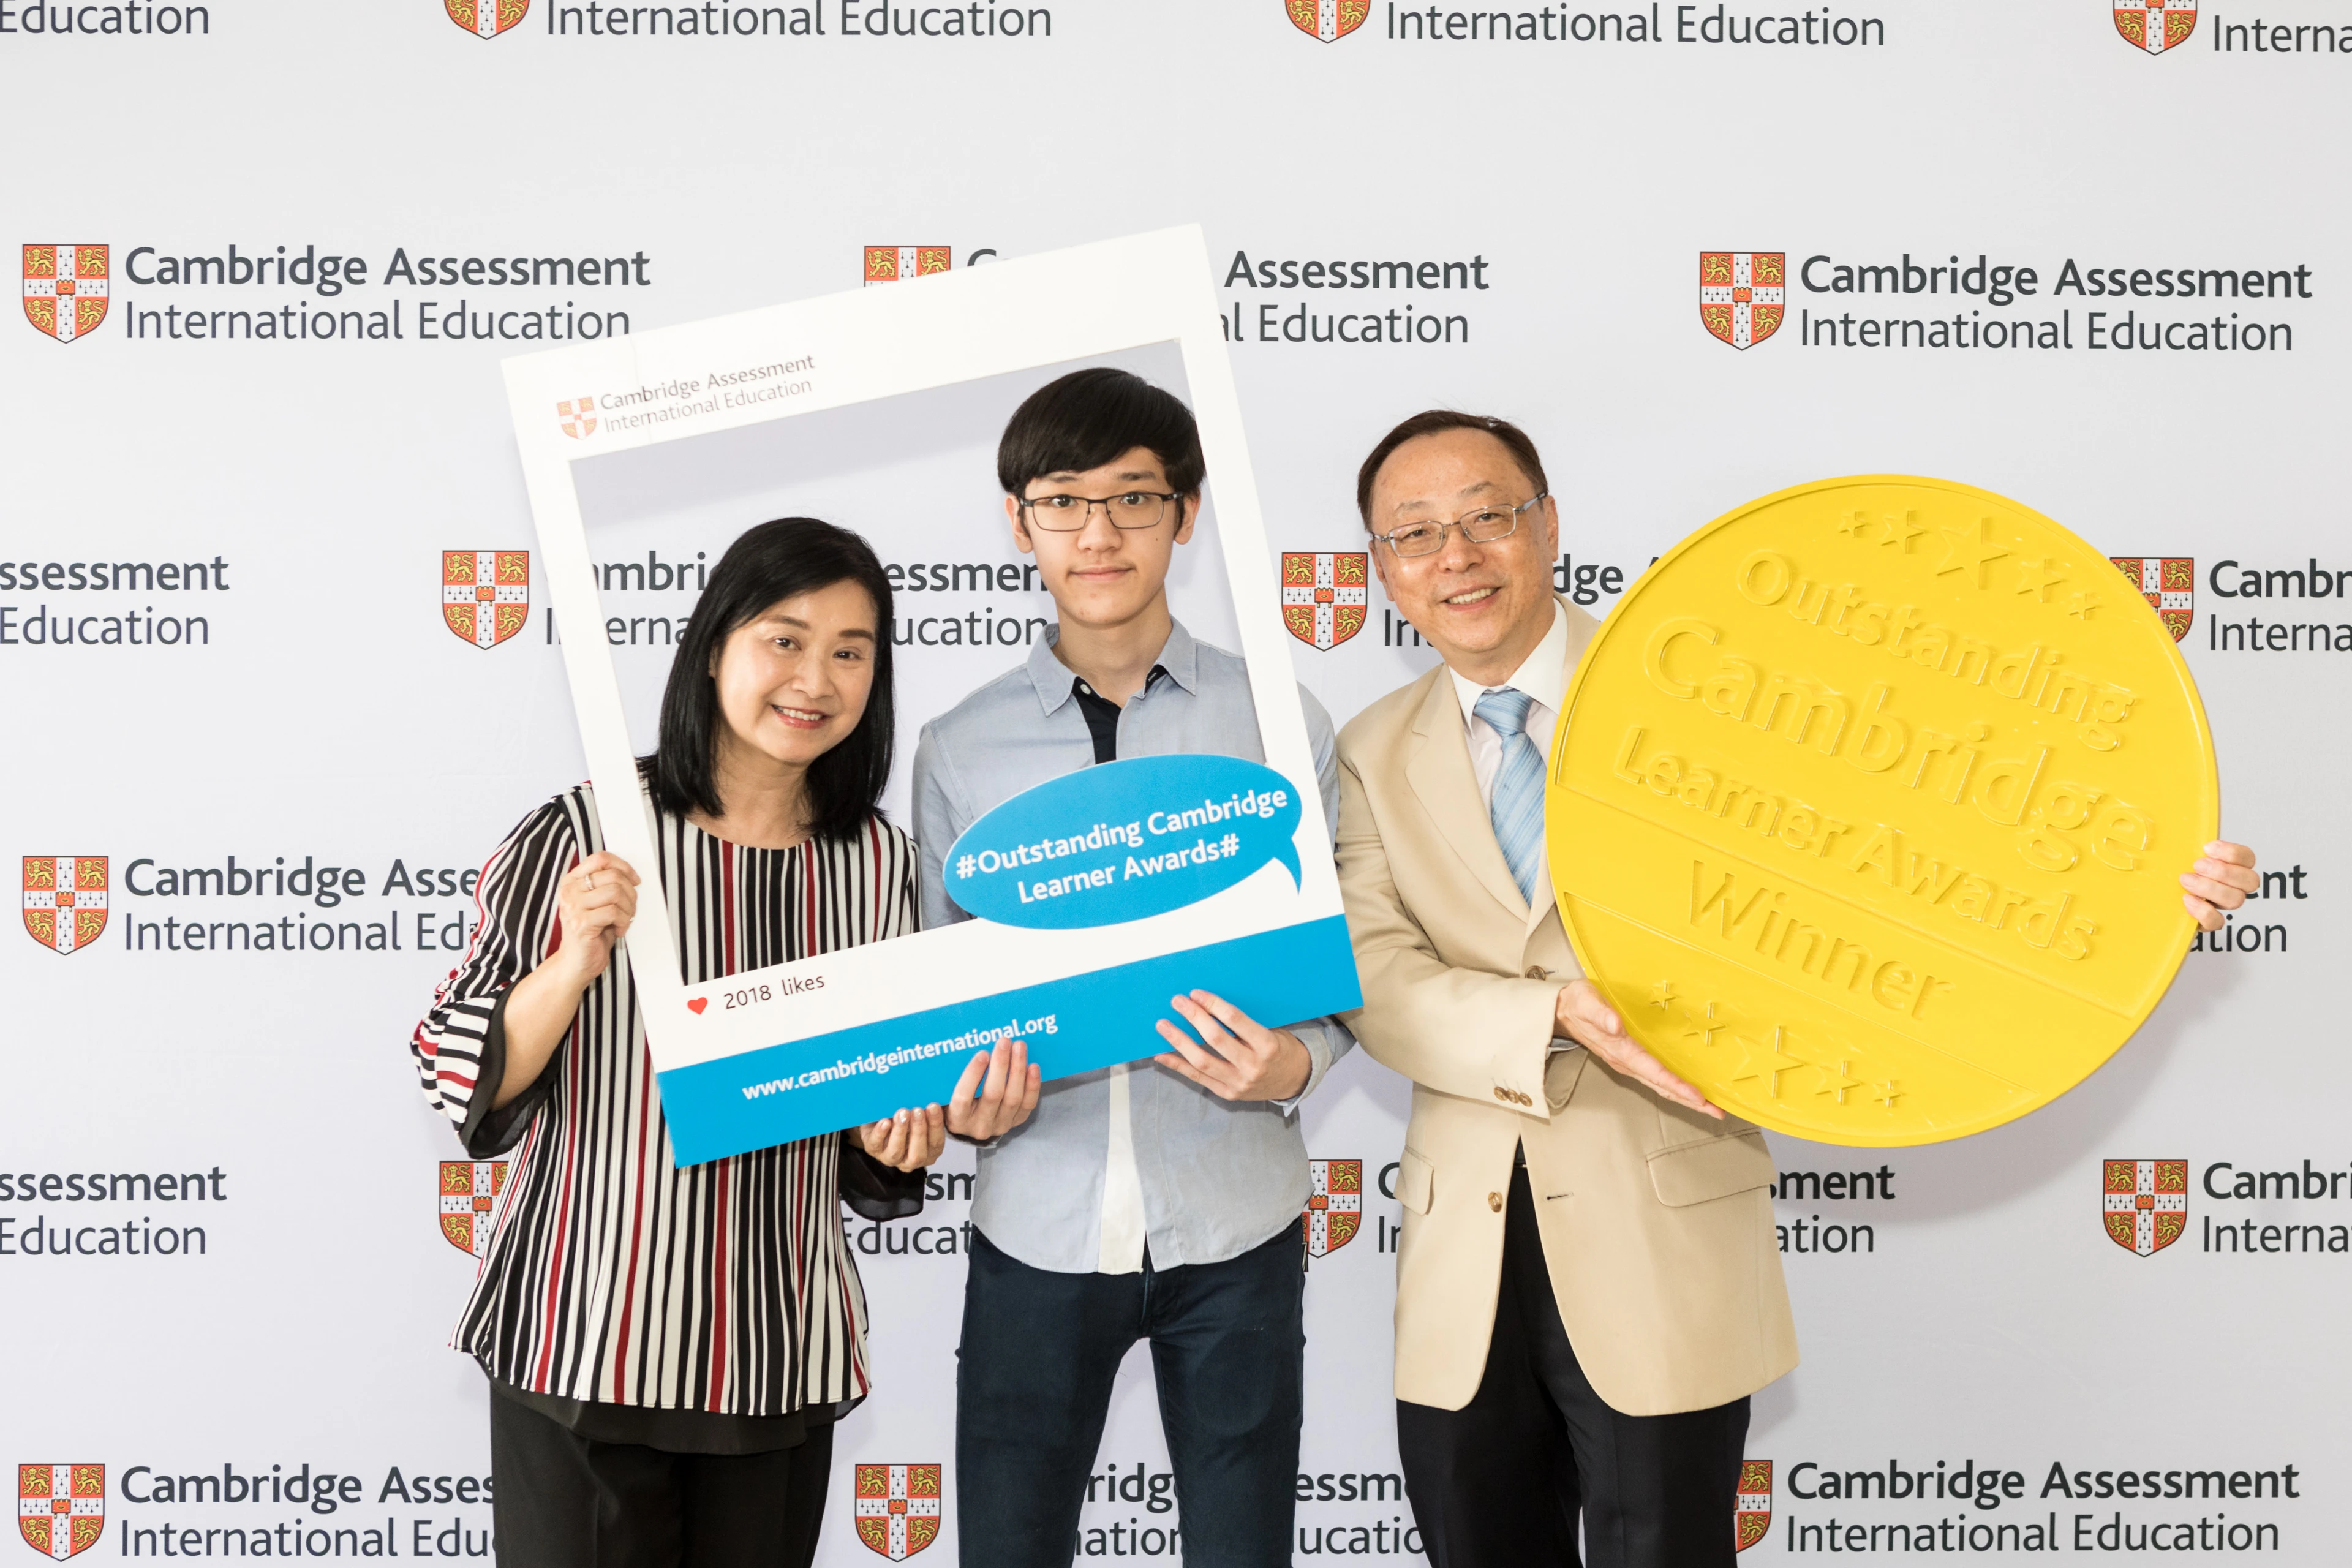 錢博士向 Ho Chun 頒發 Outstanding Cambridge Learners Awards 證書和獎牌。